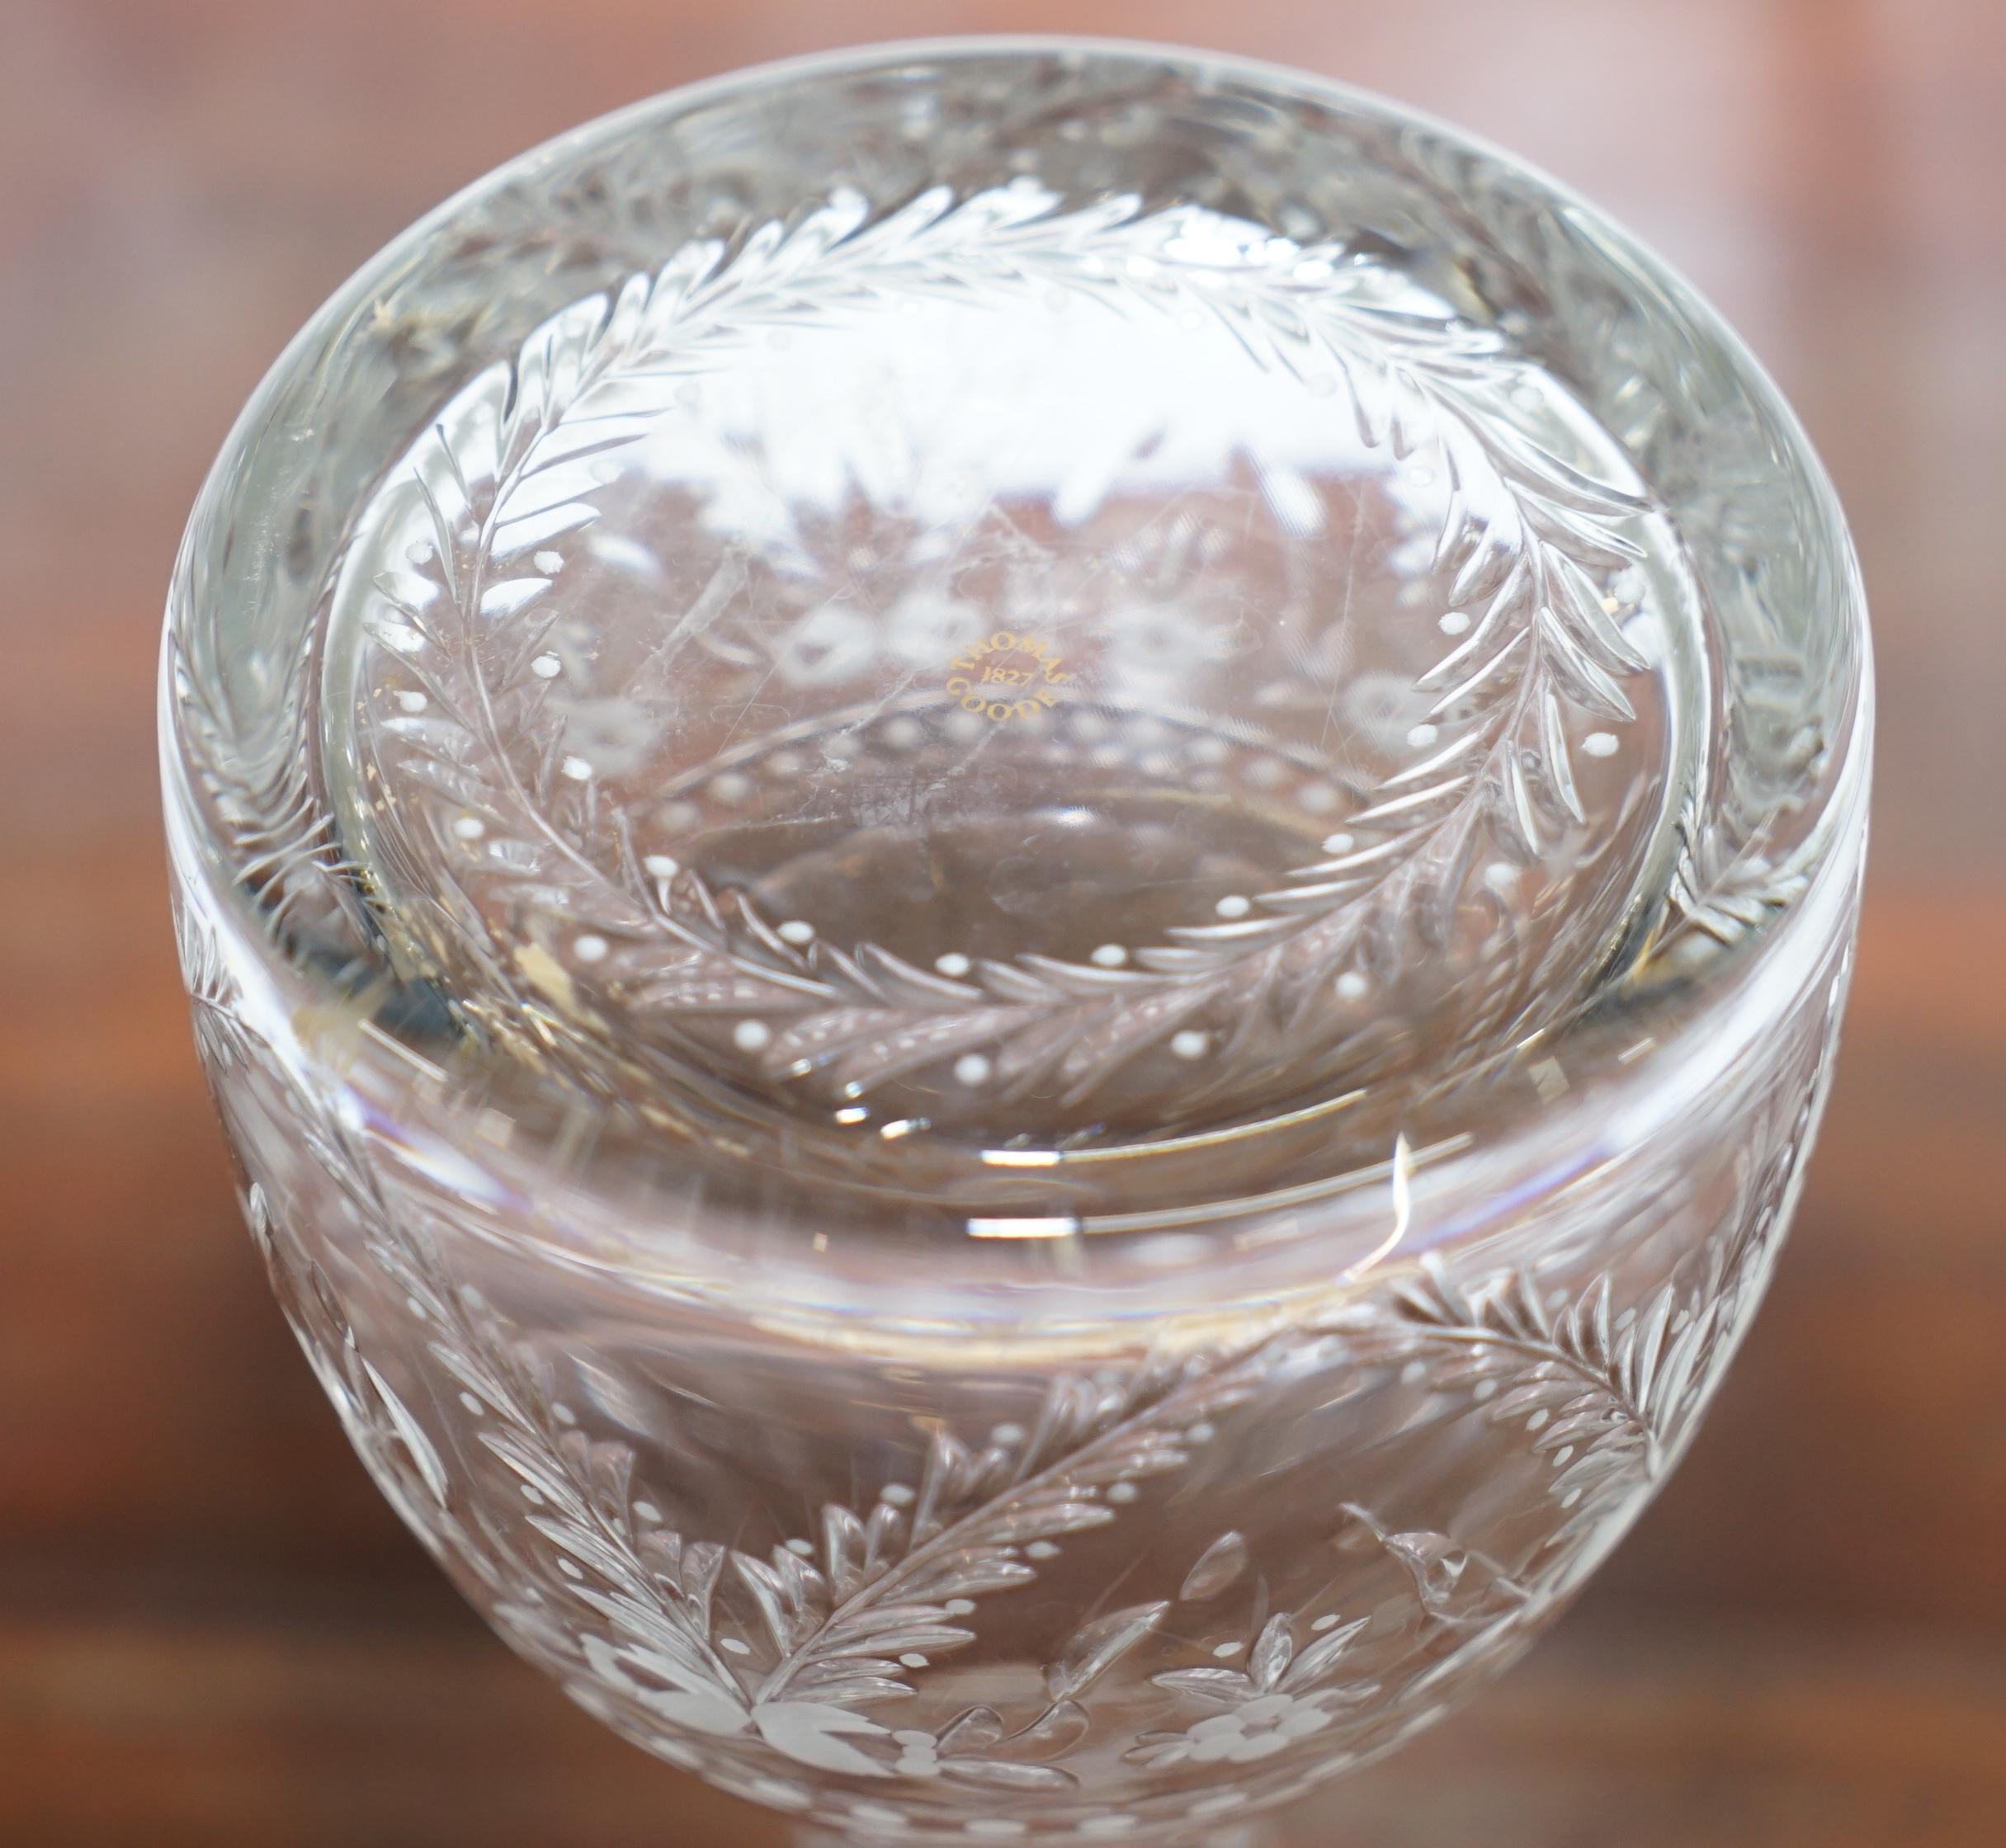 Stunning Pair of Original Thomas Goode 1827 Cut Glass Crystal Decanters 10